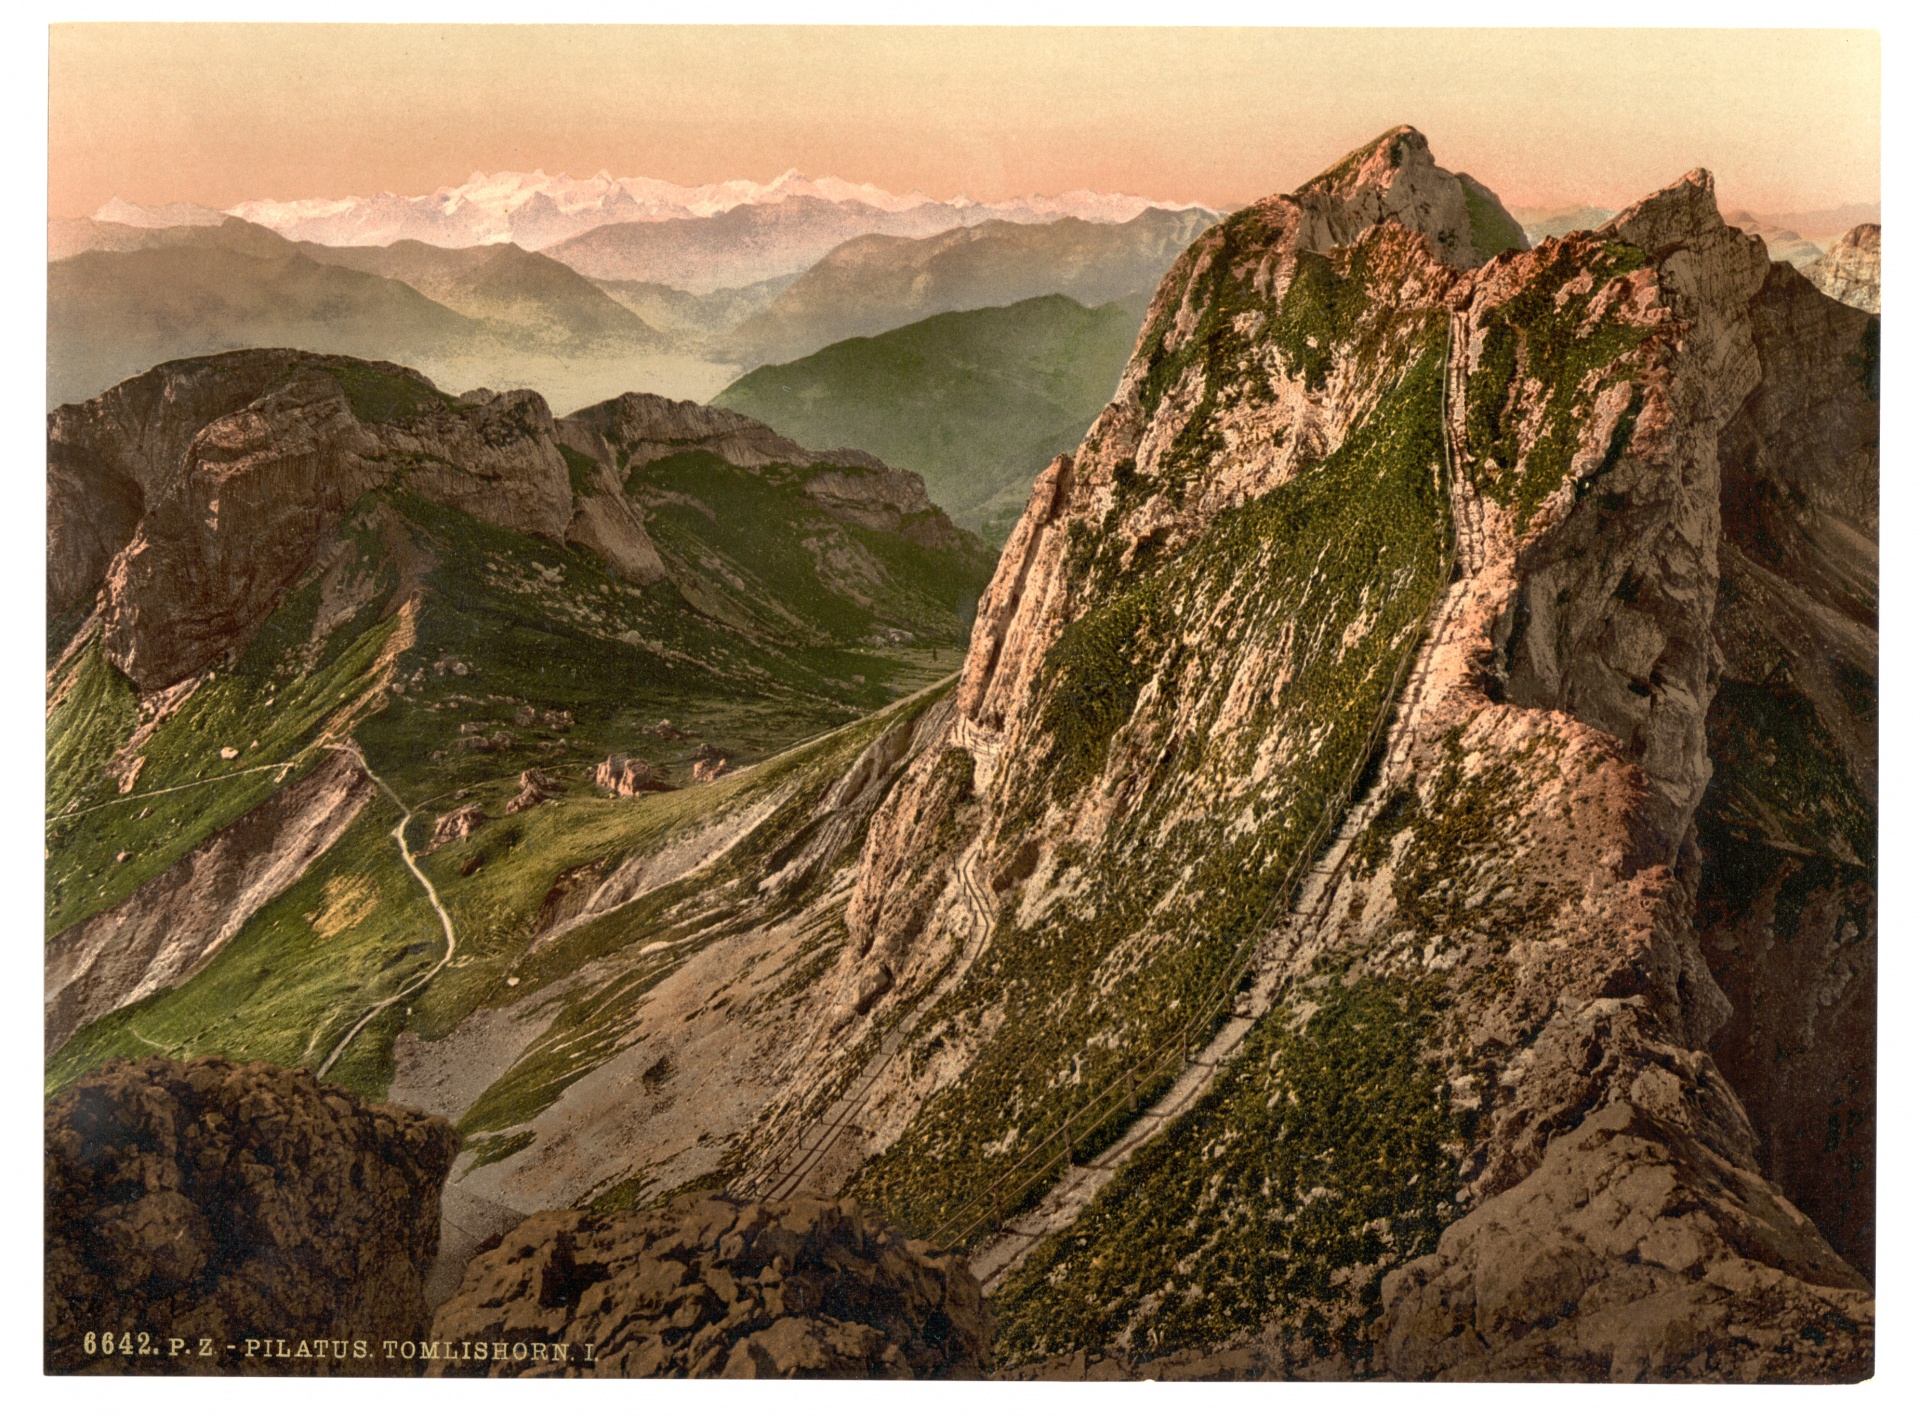 Tomlishorn Alpes Suisse